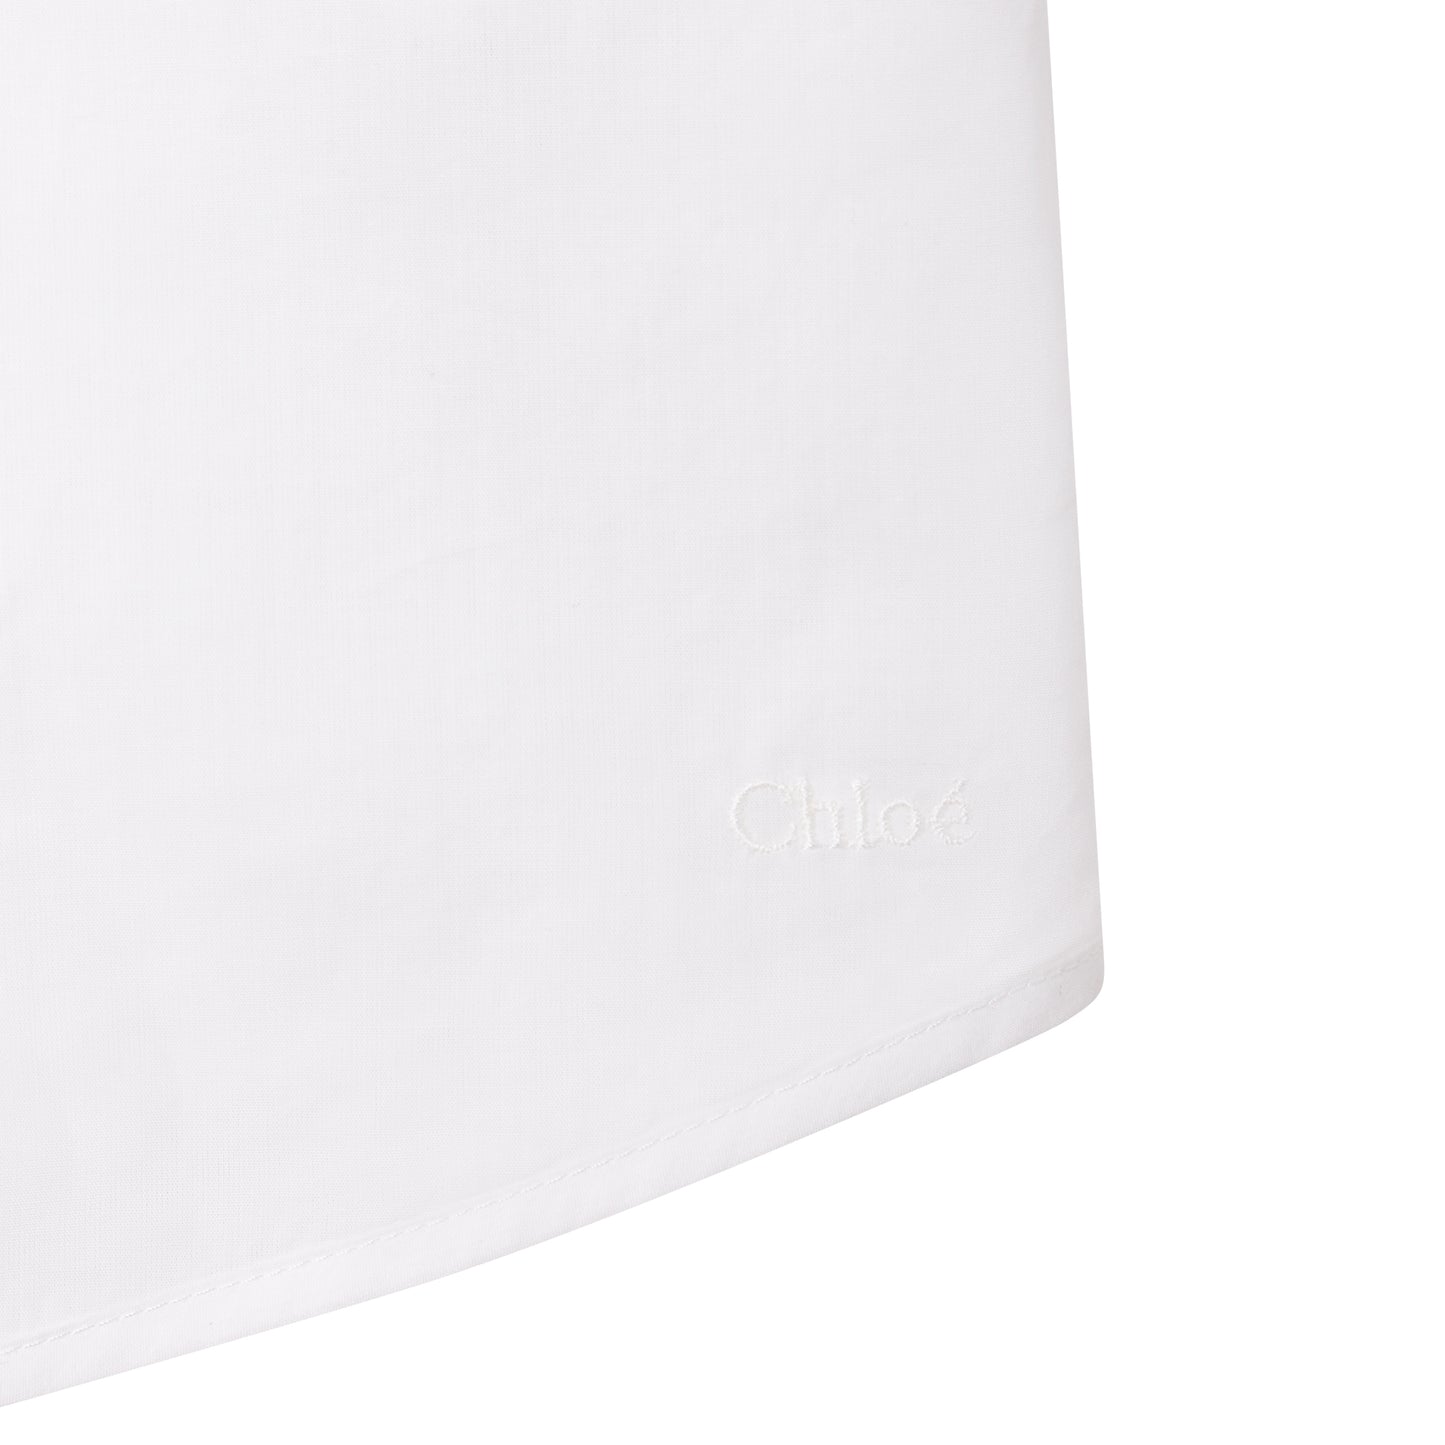 Chloe T-Shirt Blouse - Off White C15D31-117